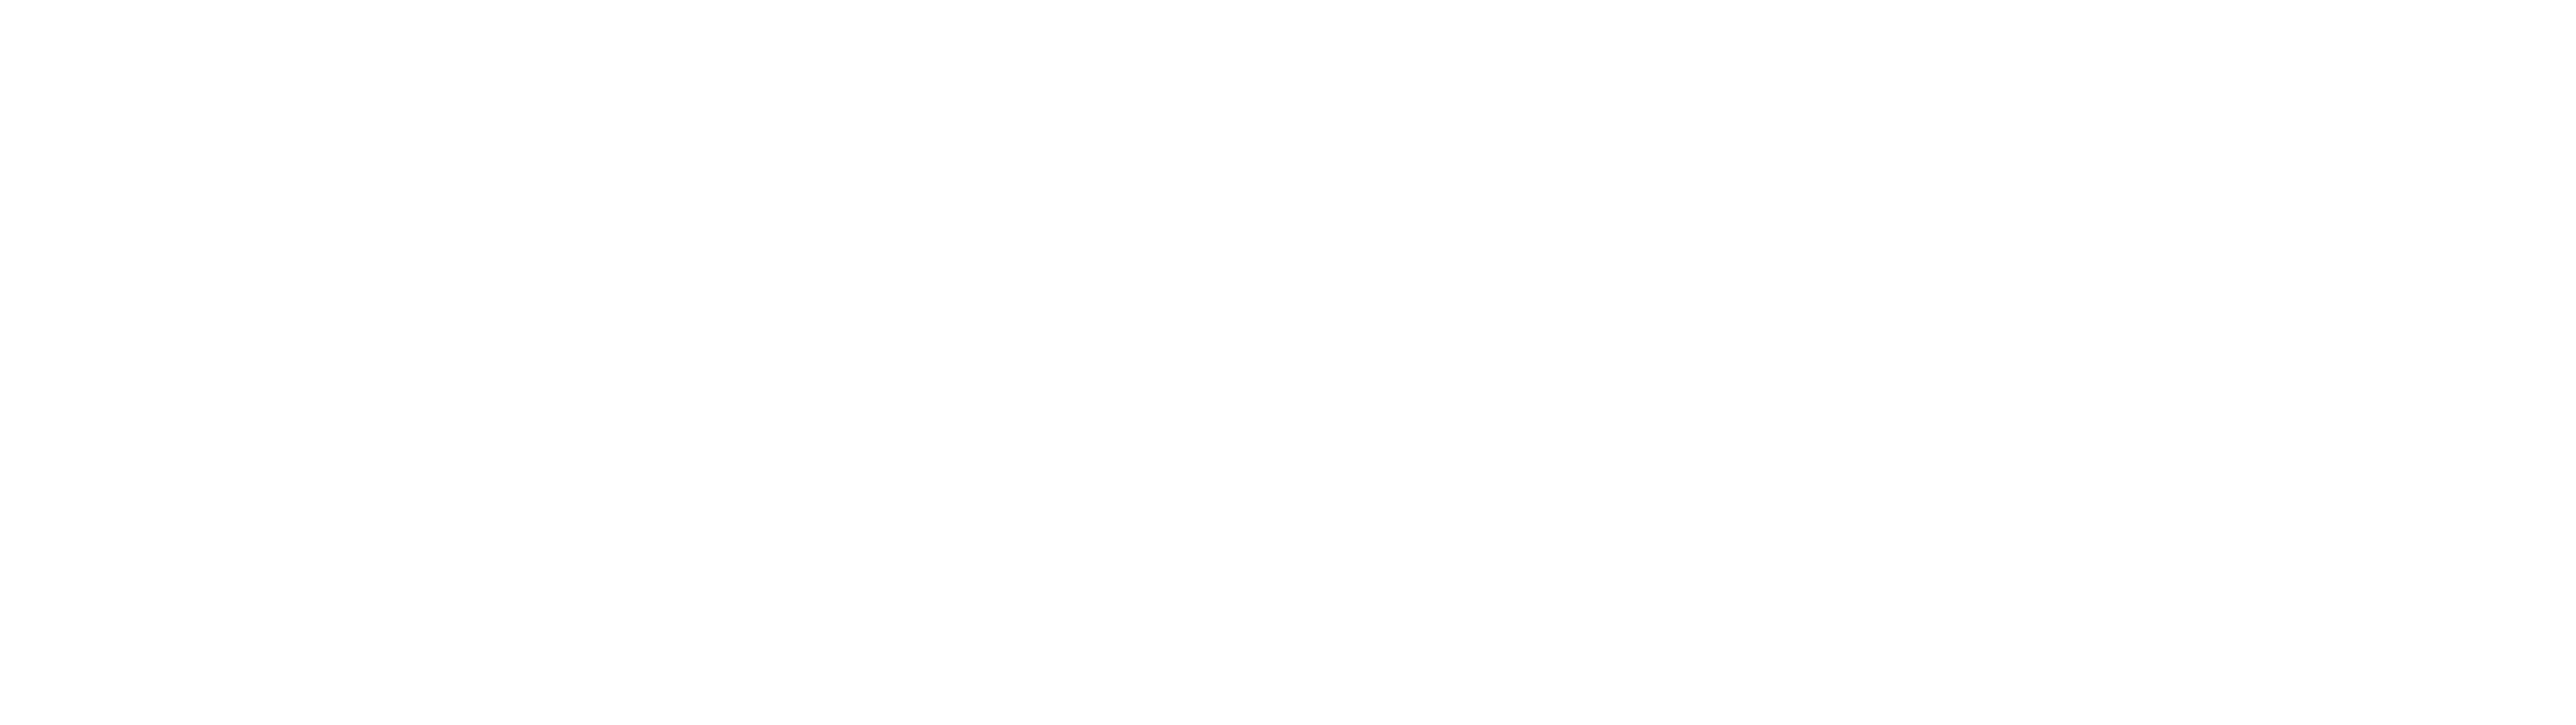 Vol СƵ Logo